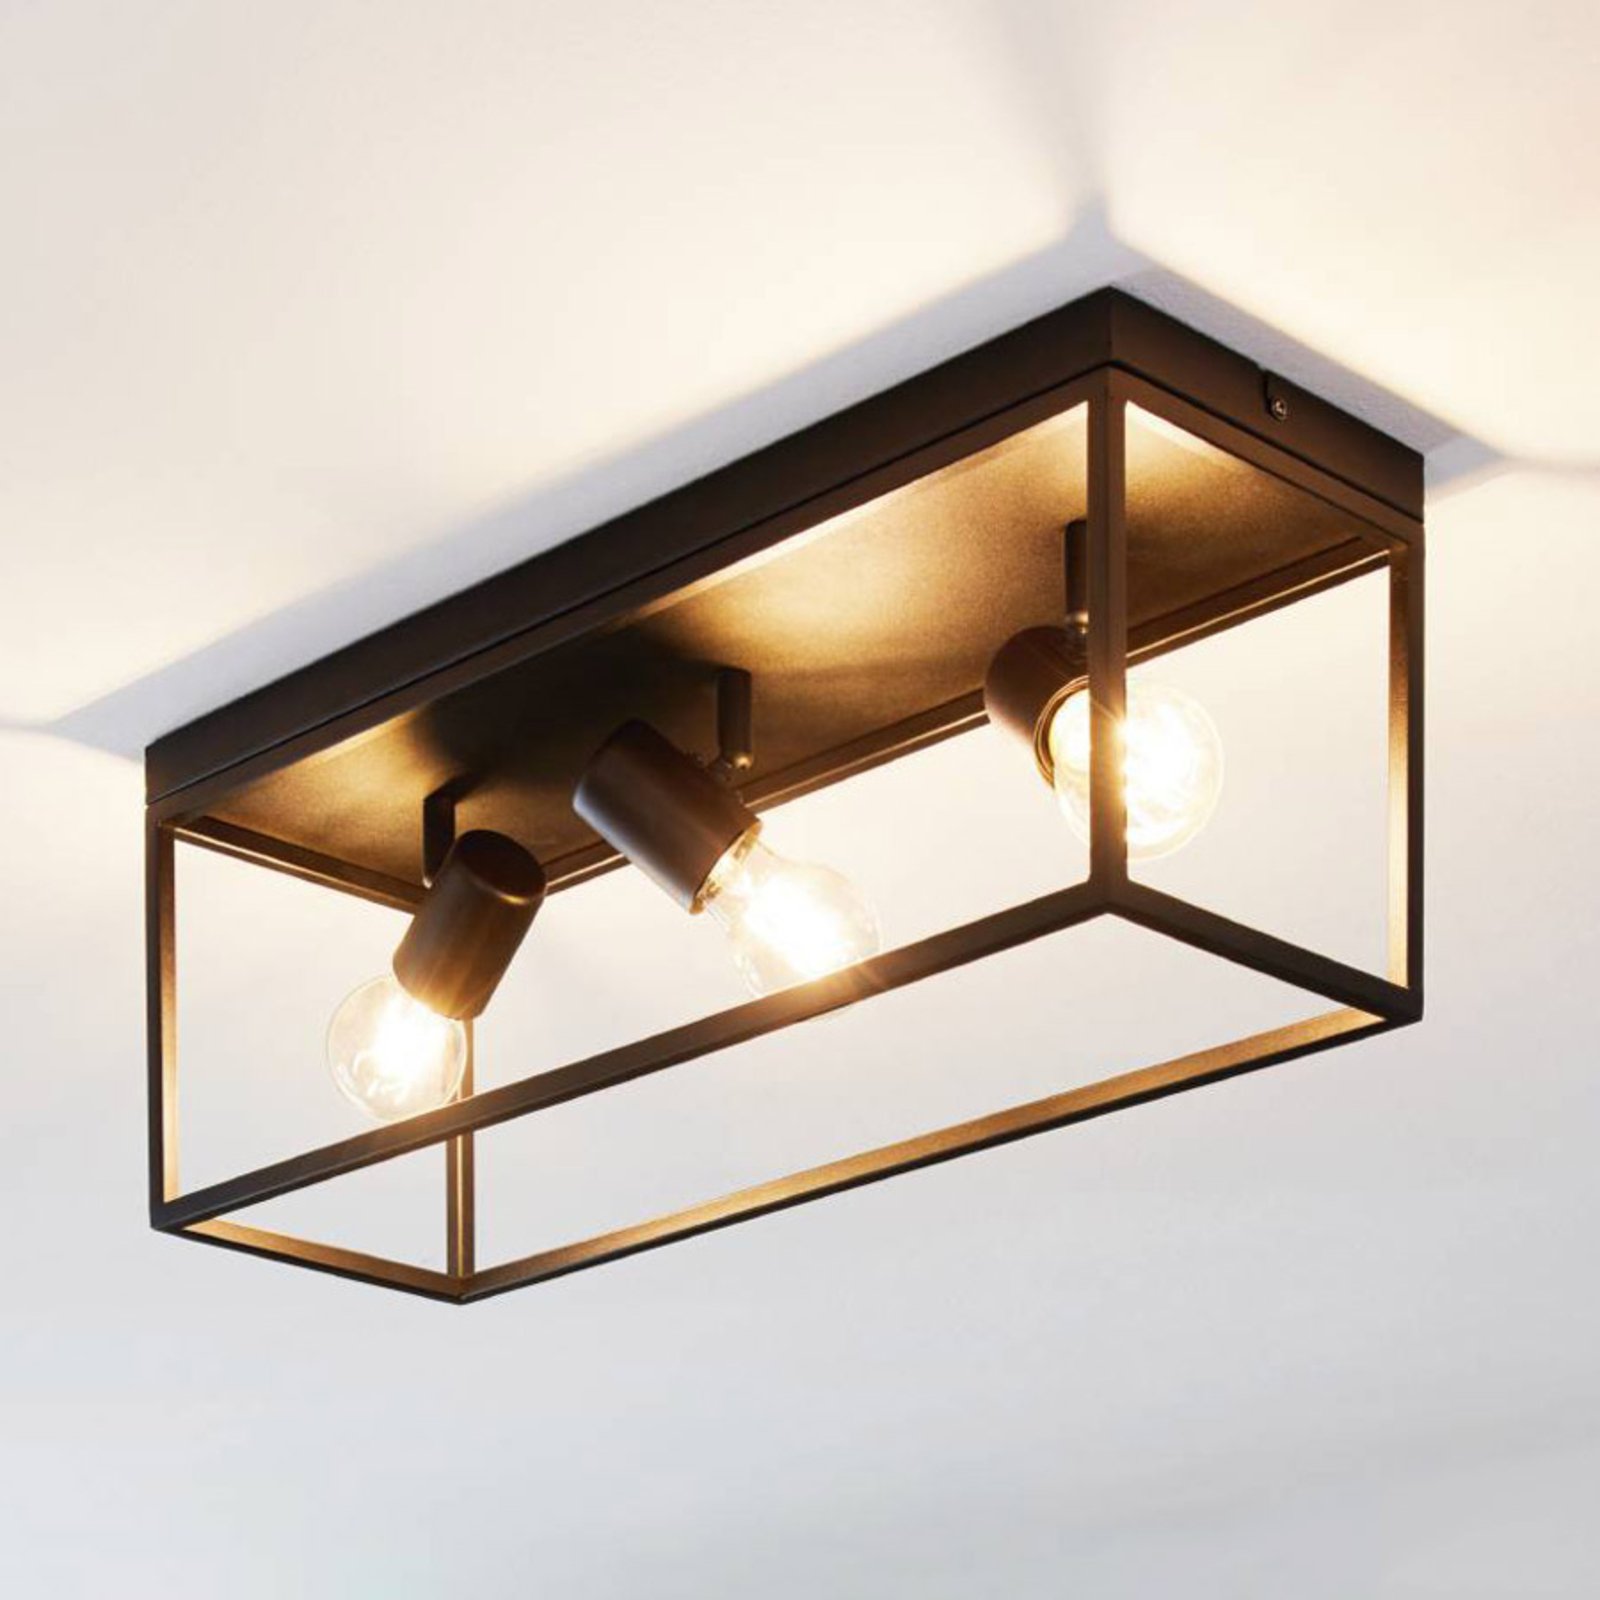 Silentina ceiling light three-bulb, 54 x 18 cm